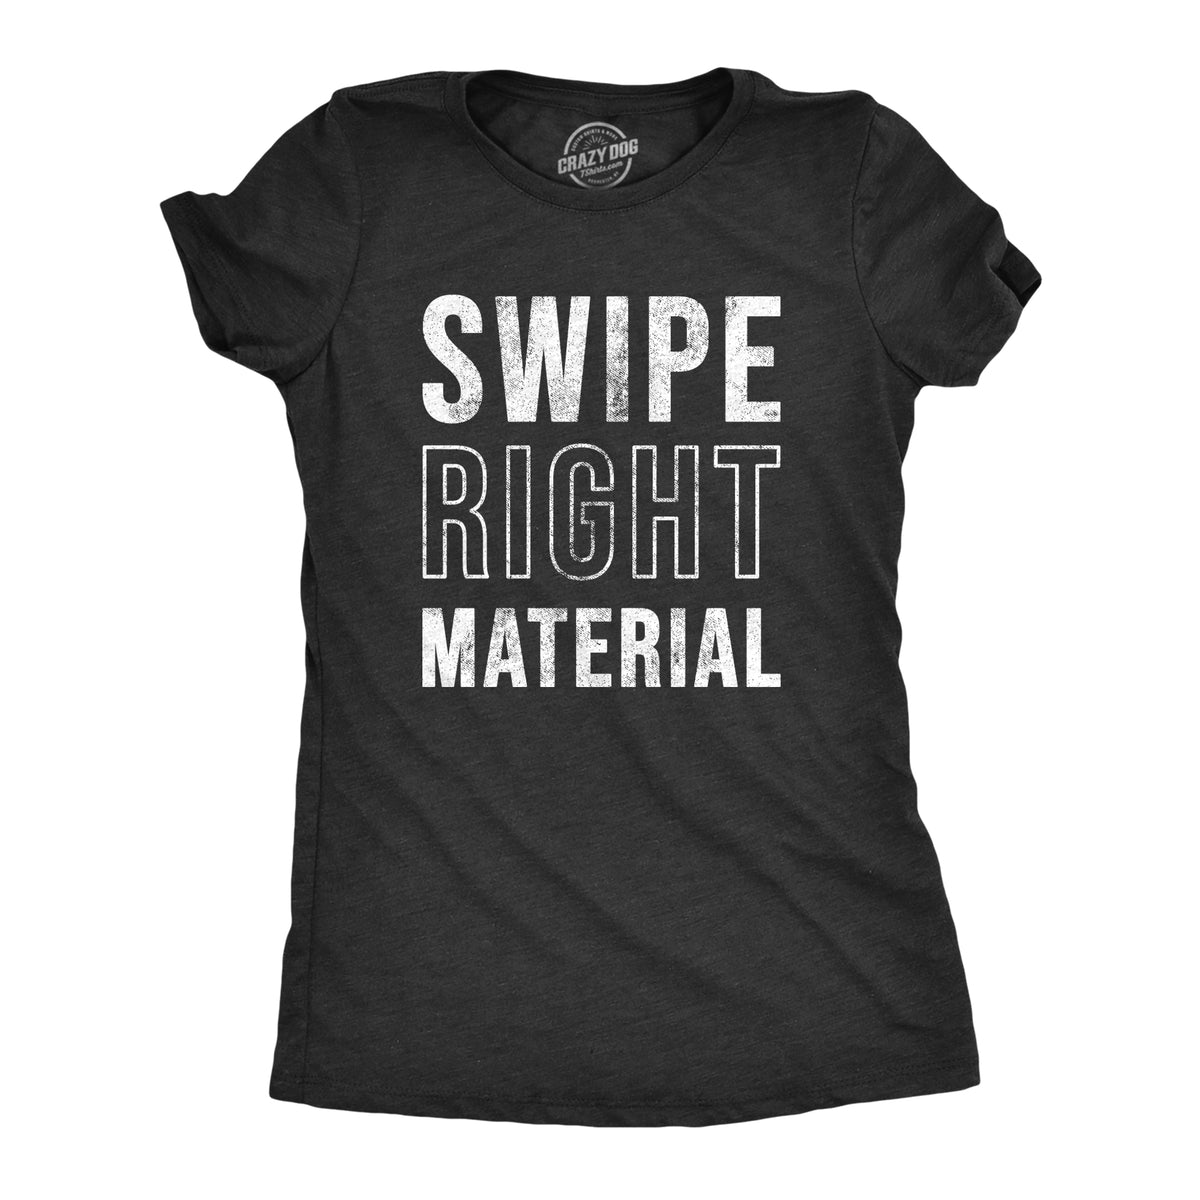 Funny Heather Black - SWIPE Swipe Right Material Womens T Shirt Nerdy Sarcastic Tee